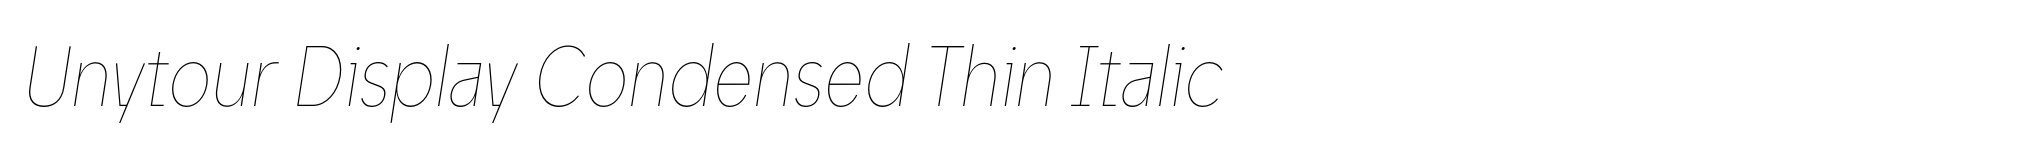 Unytour Display Condensed Thin Italic image